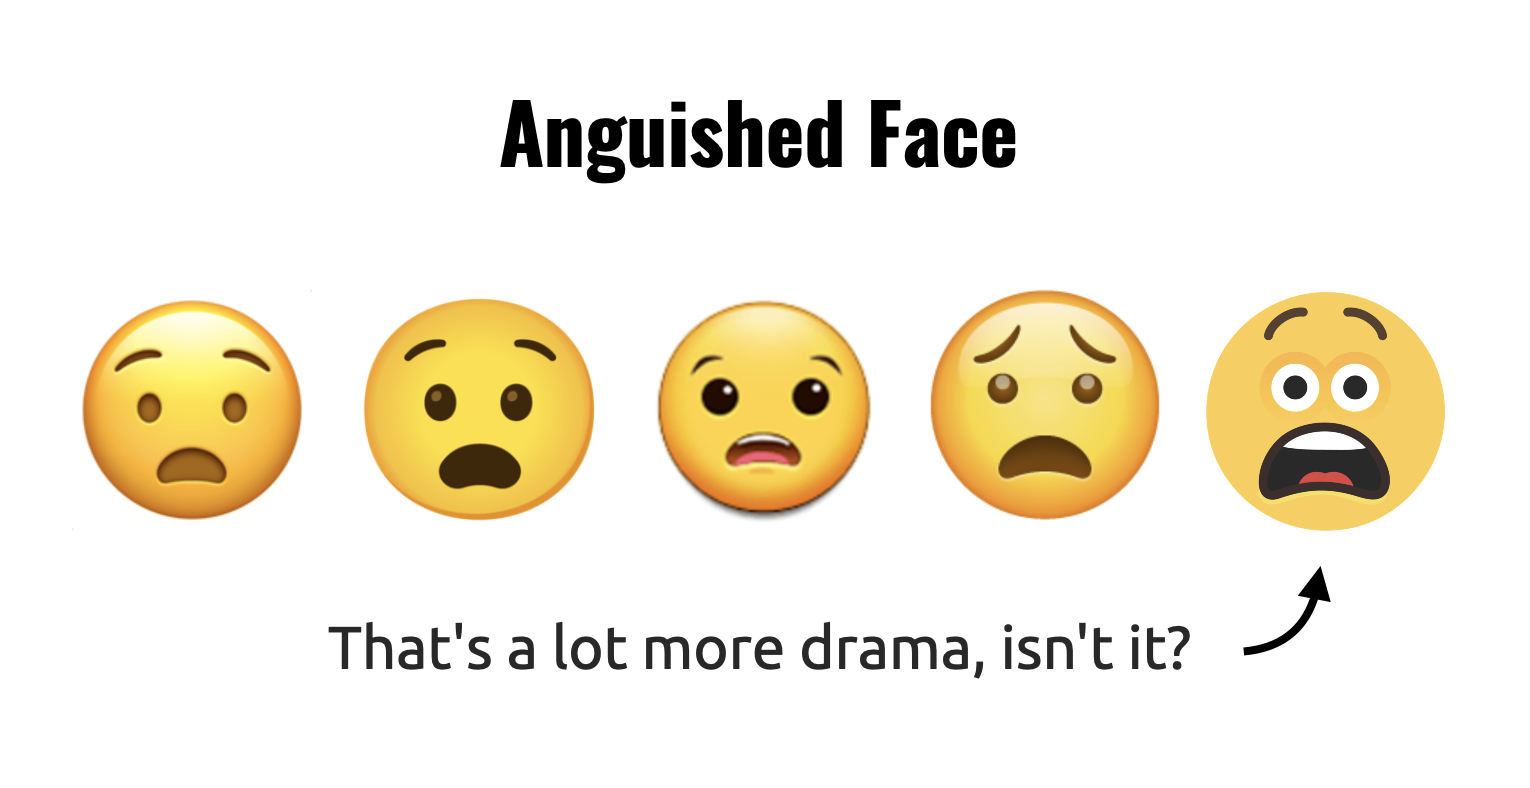 Anguished Face emoji rendered on different platforms